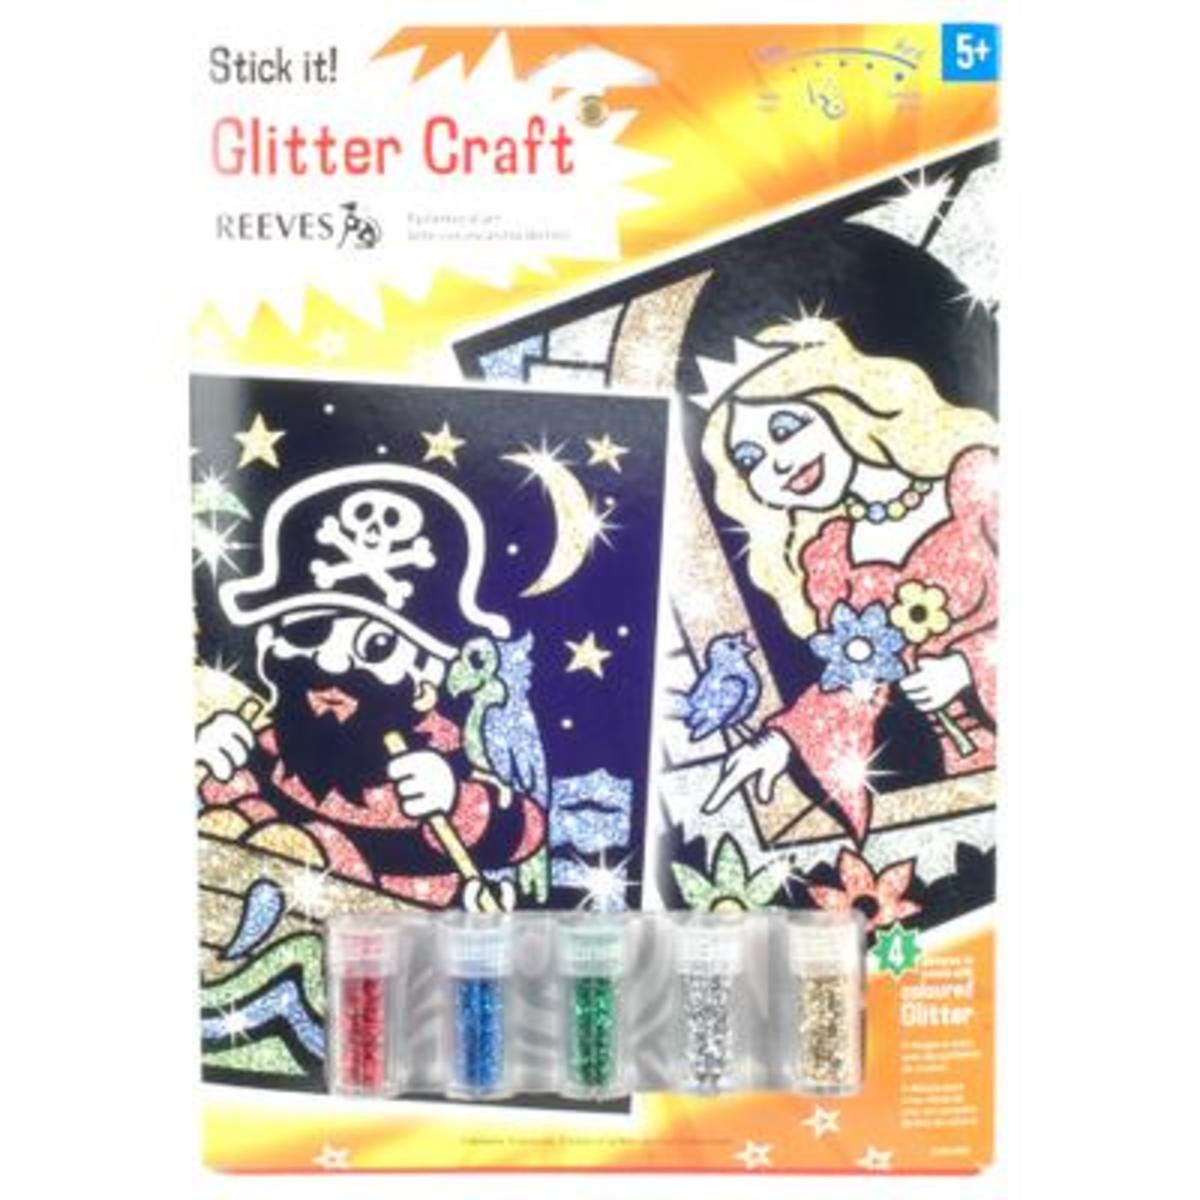 Glitter Craft